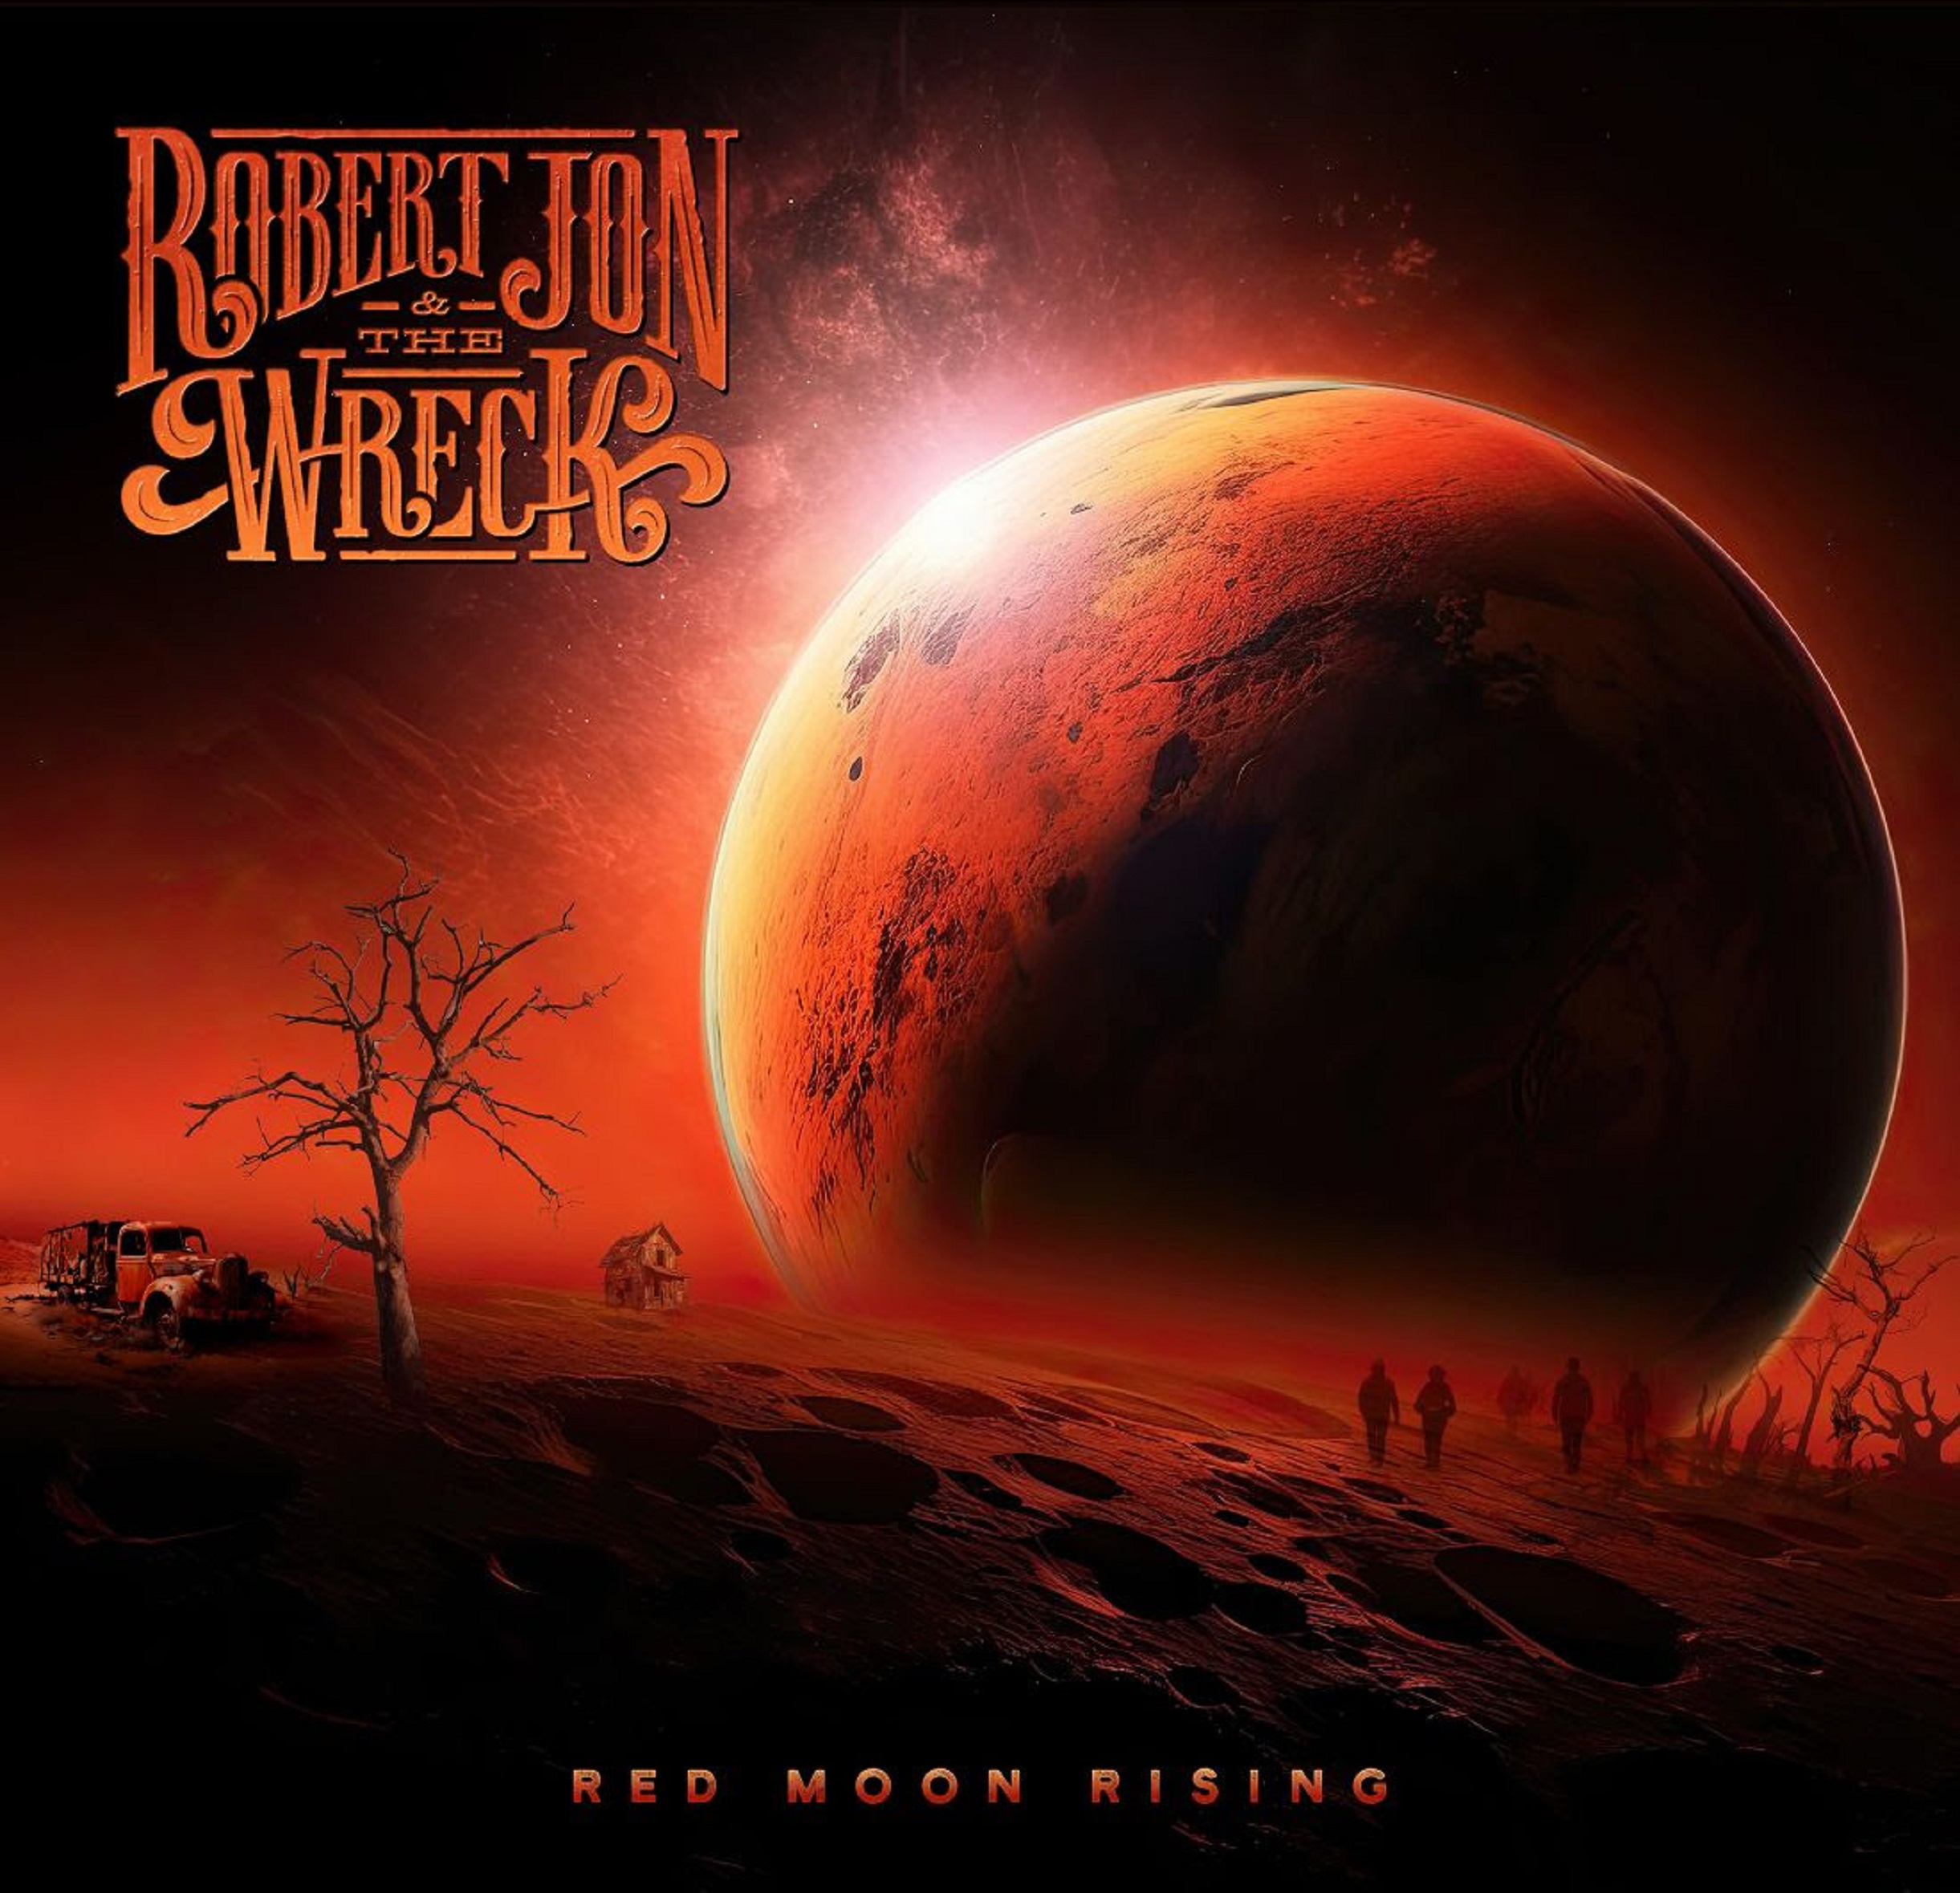 California Rockers Robert Jon & The Wreck Announce New Album, 'Red Moon Rising'